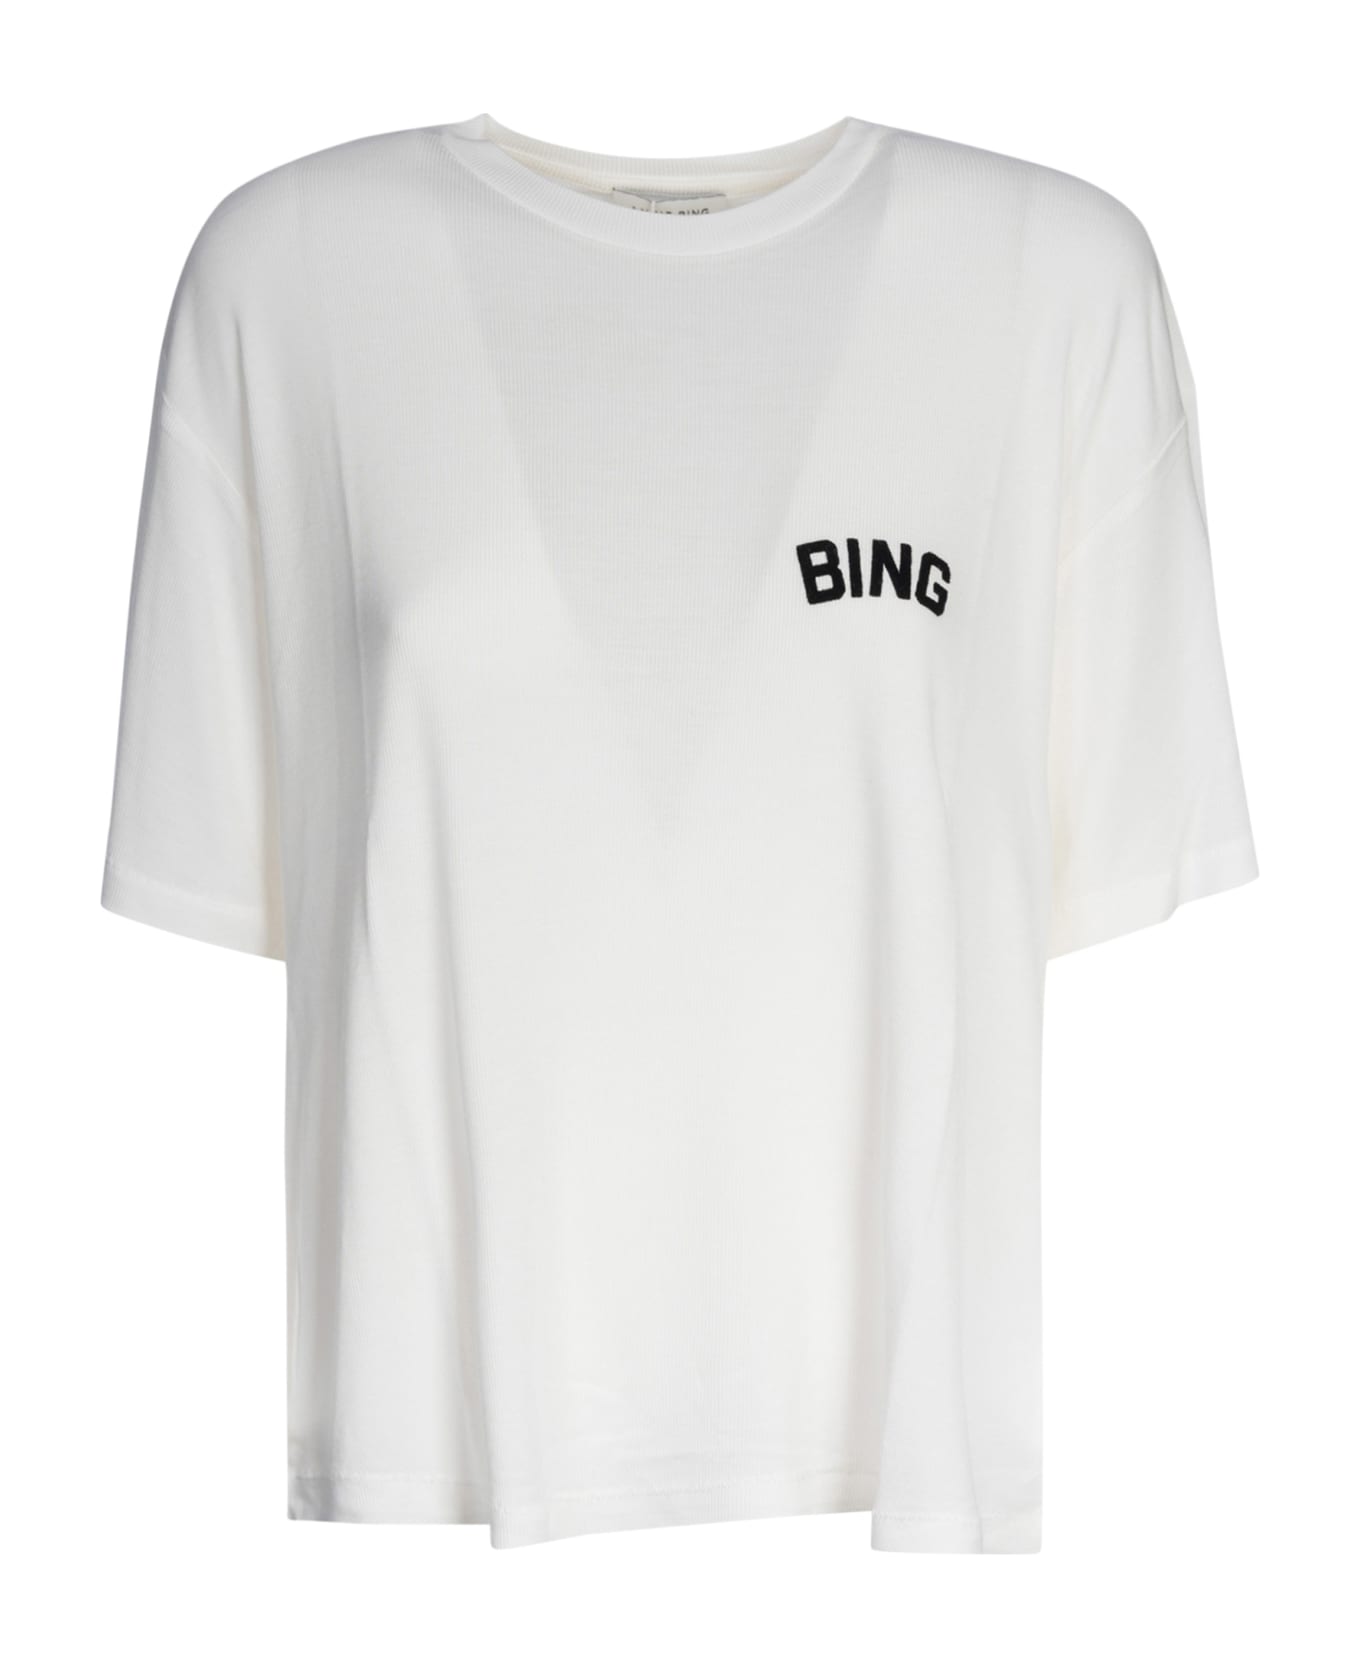 Anine Bing Ivory T-shirt - Ivory